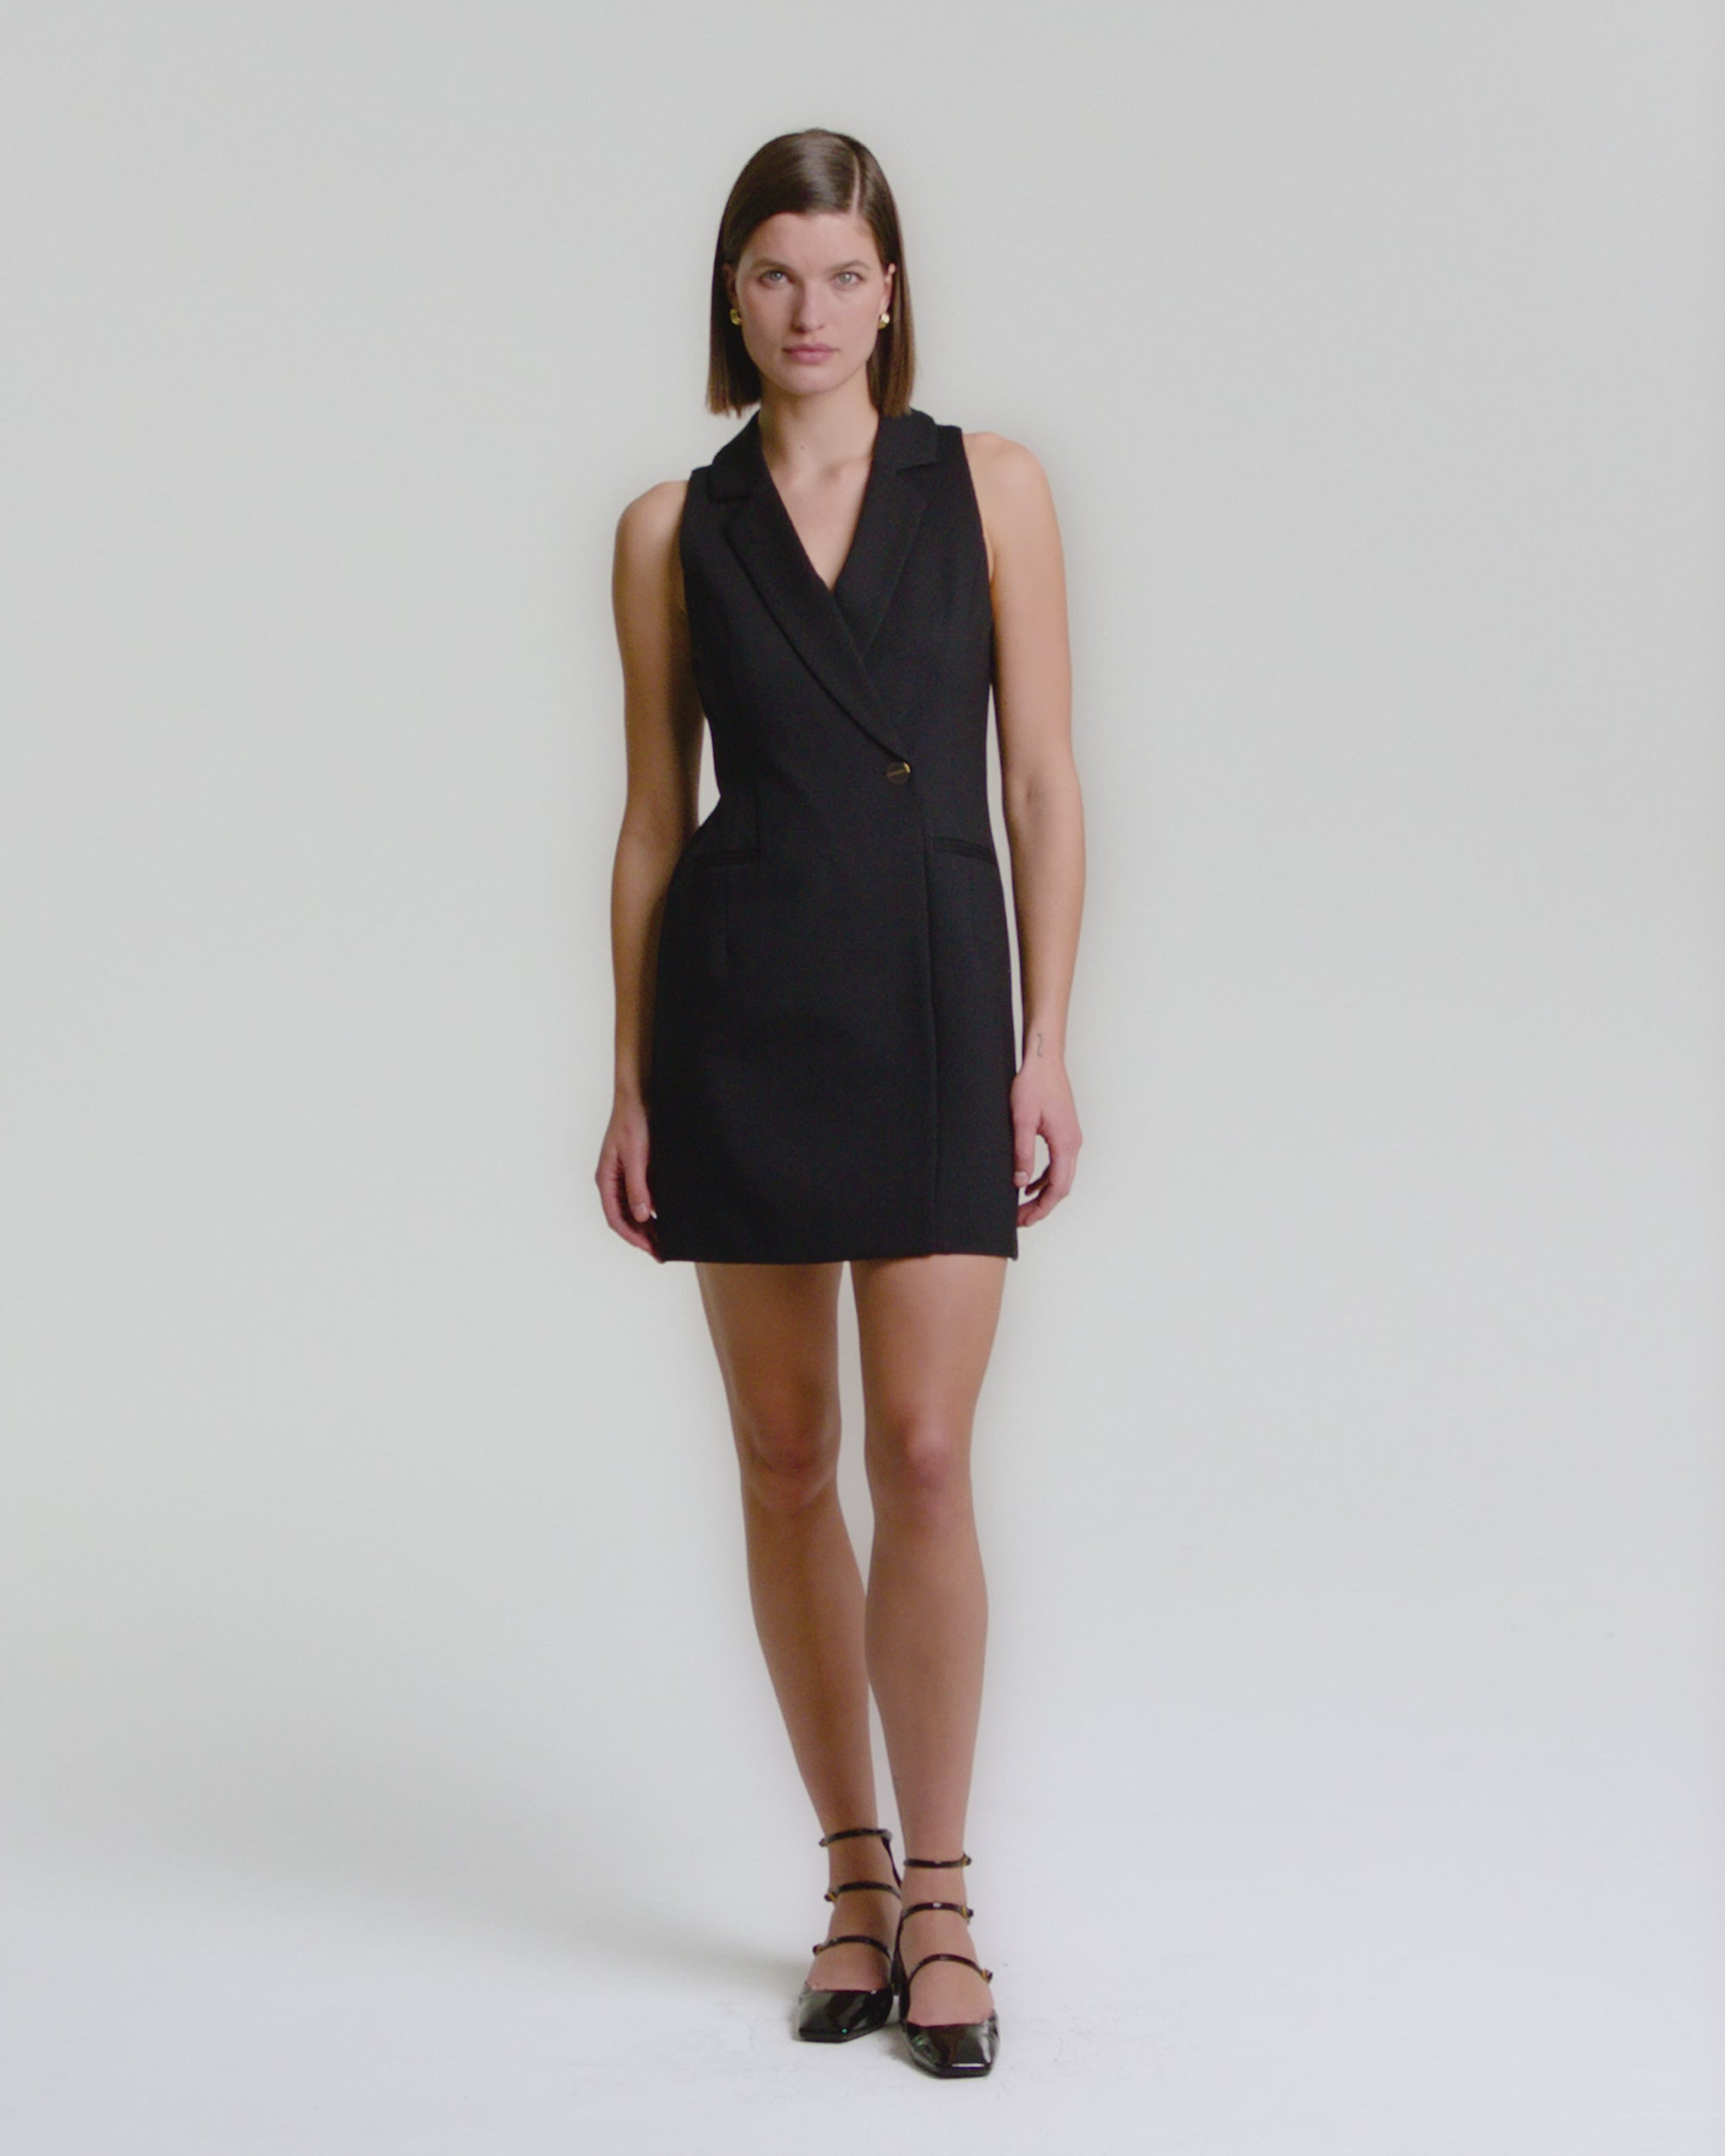 Spanx Women’s Size XS Black Sleeveless Fit & Flare Pocket Dress